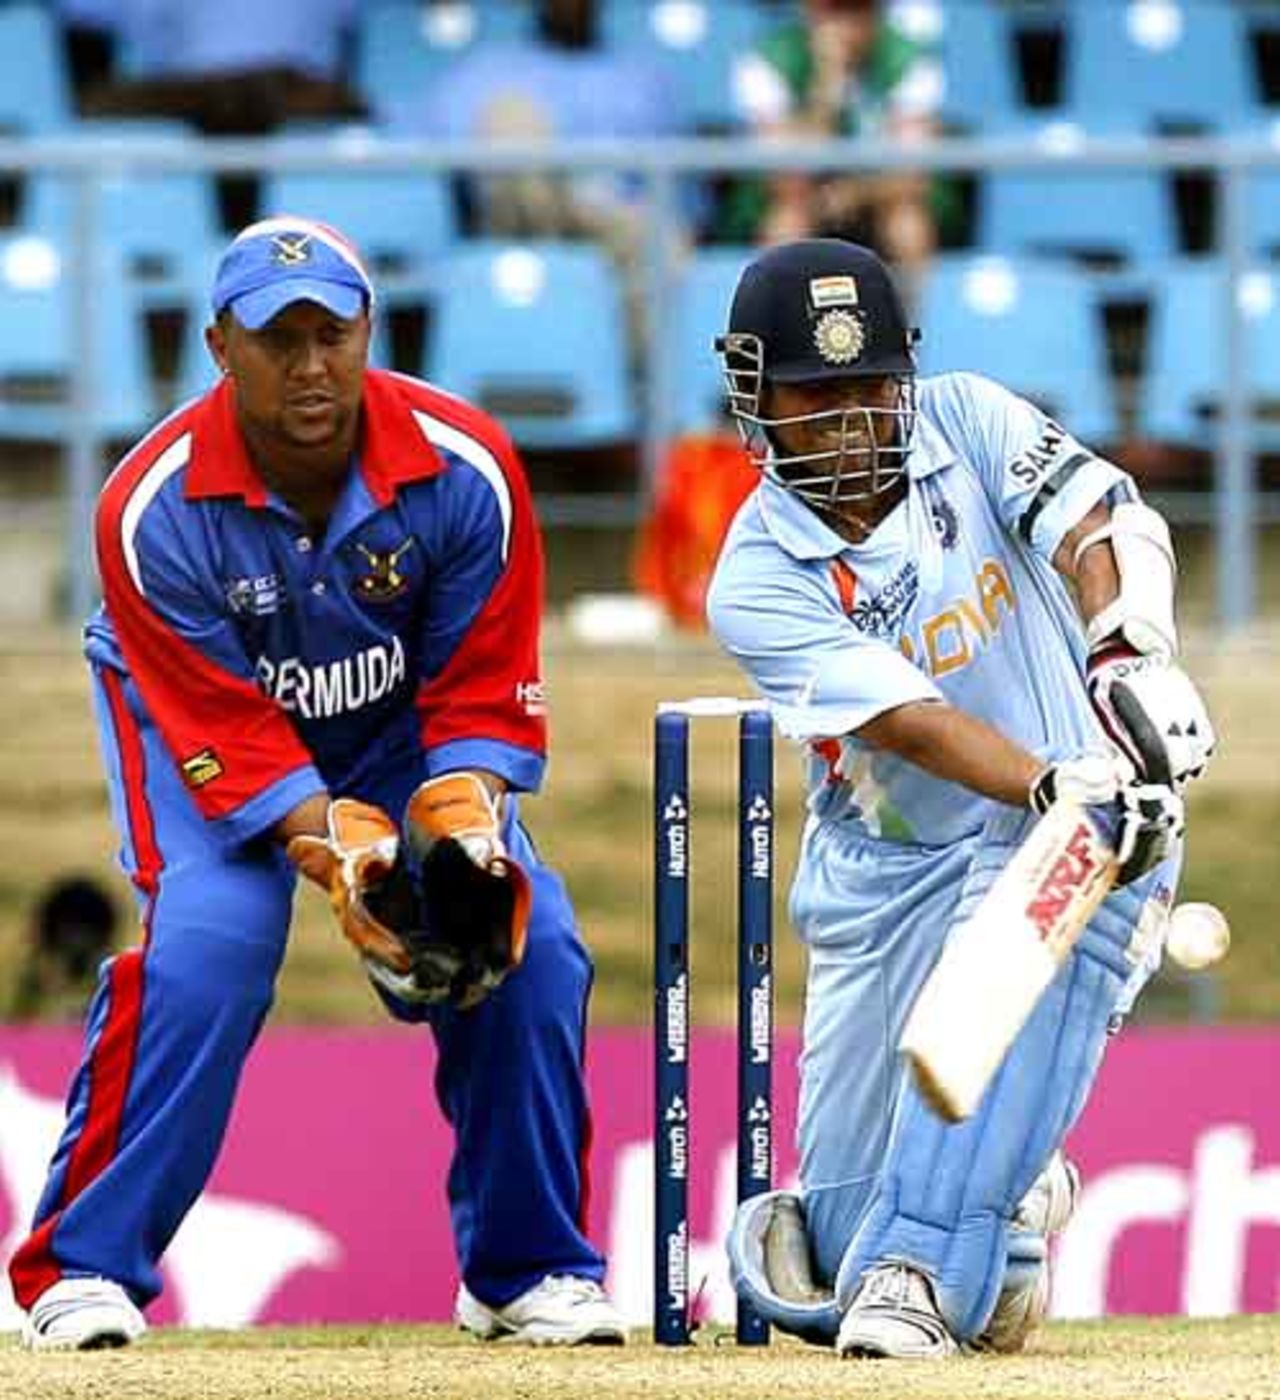 Sachin Tendulkar provided the tail-end fireworks with a 29-ball 57, Bermuda v India, Group B, Trinidad, March 19, 2007